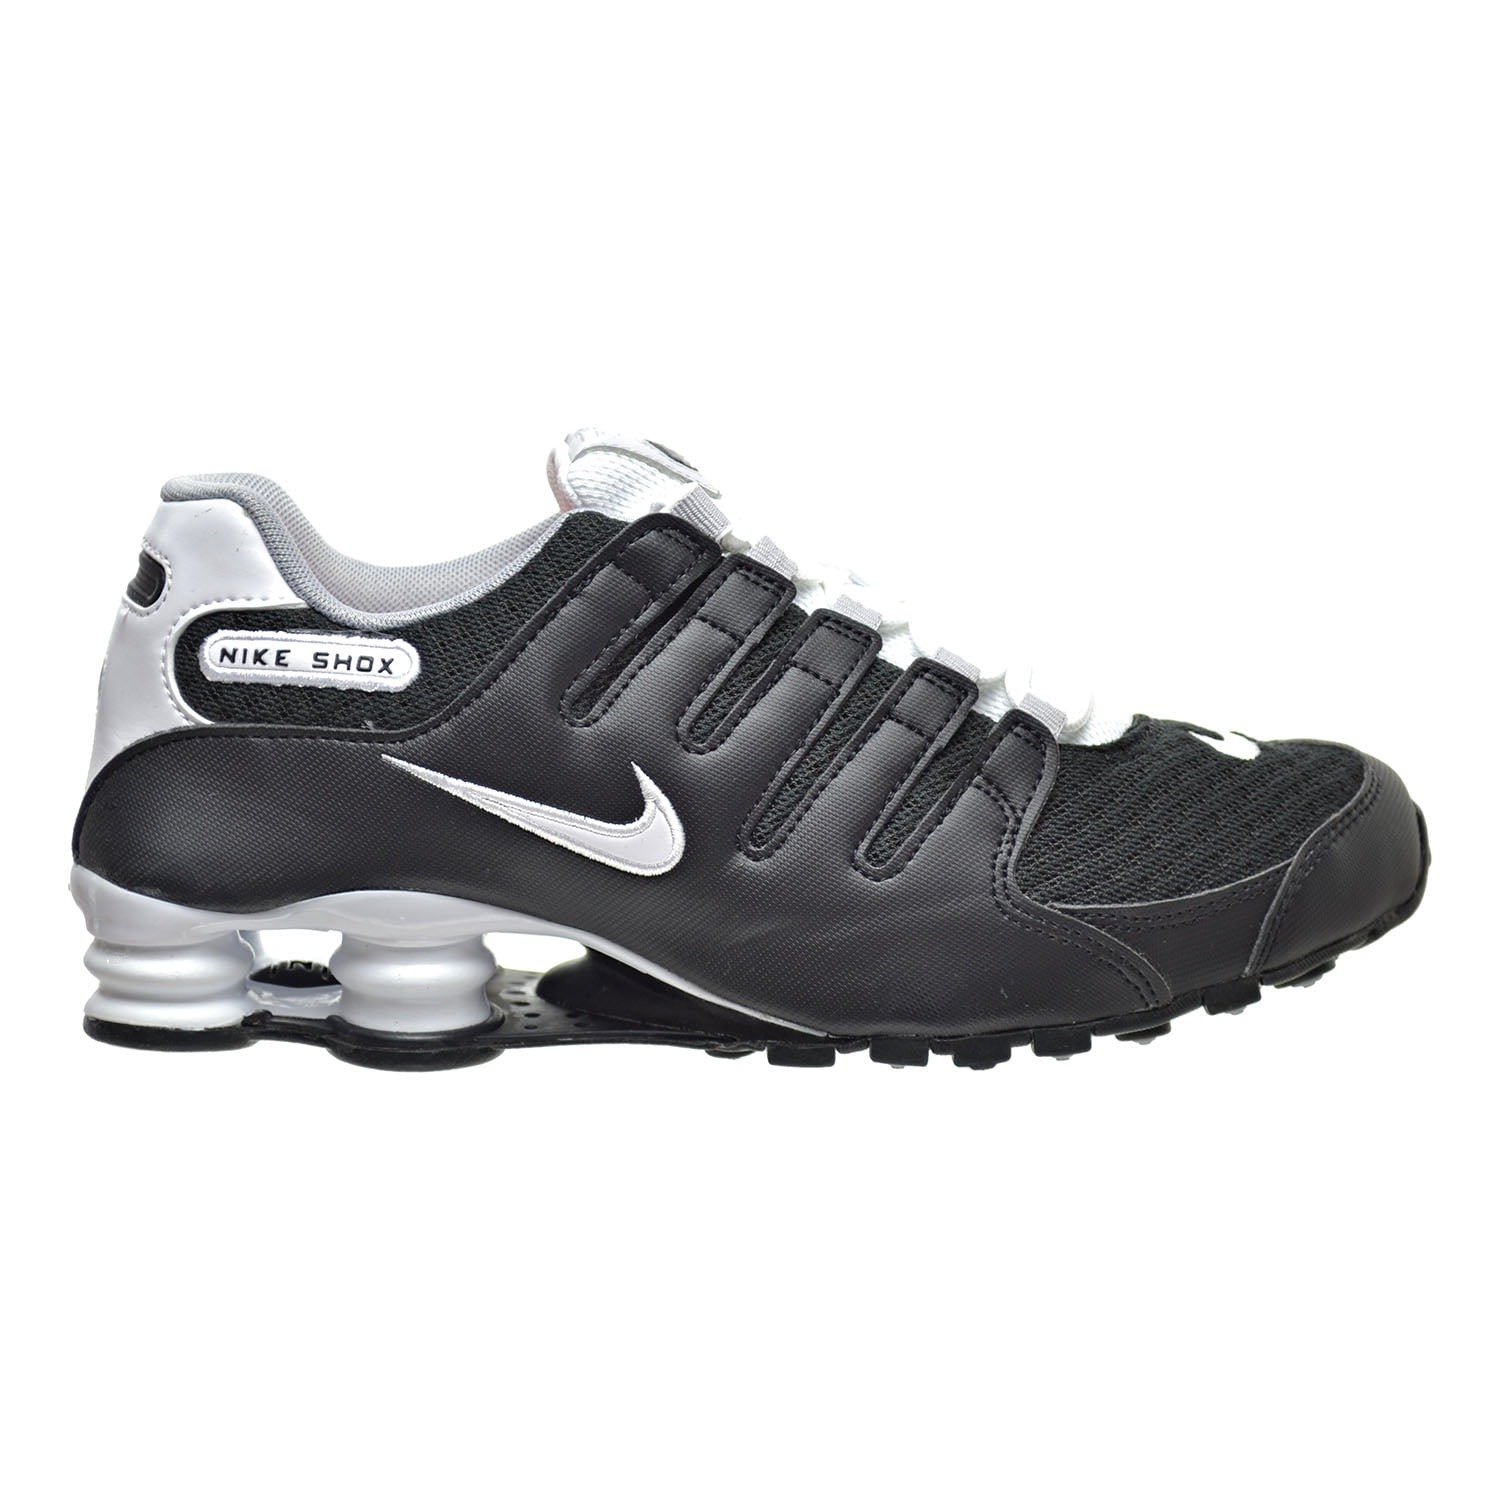 Nike Shox NZ Men's Shoes Black/White/Wolf Grey (8 D(M) US) - Walmart.com